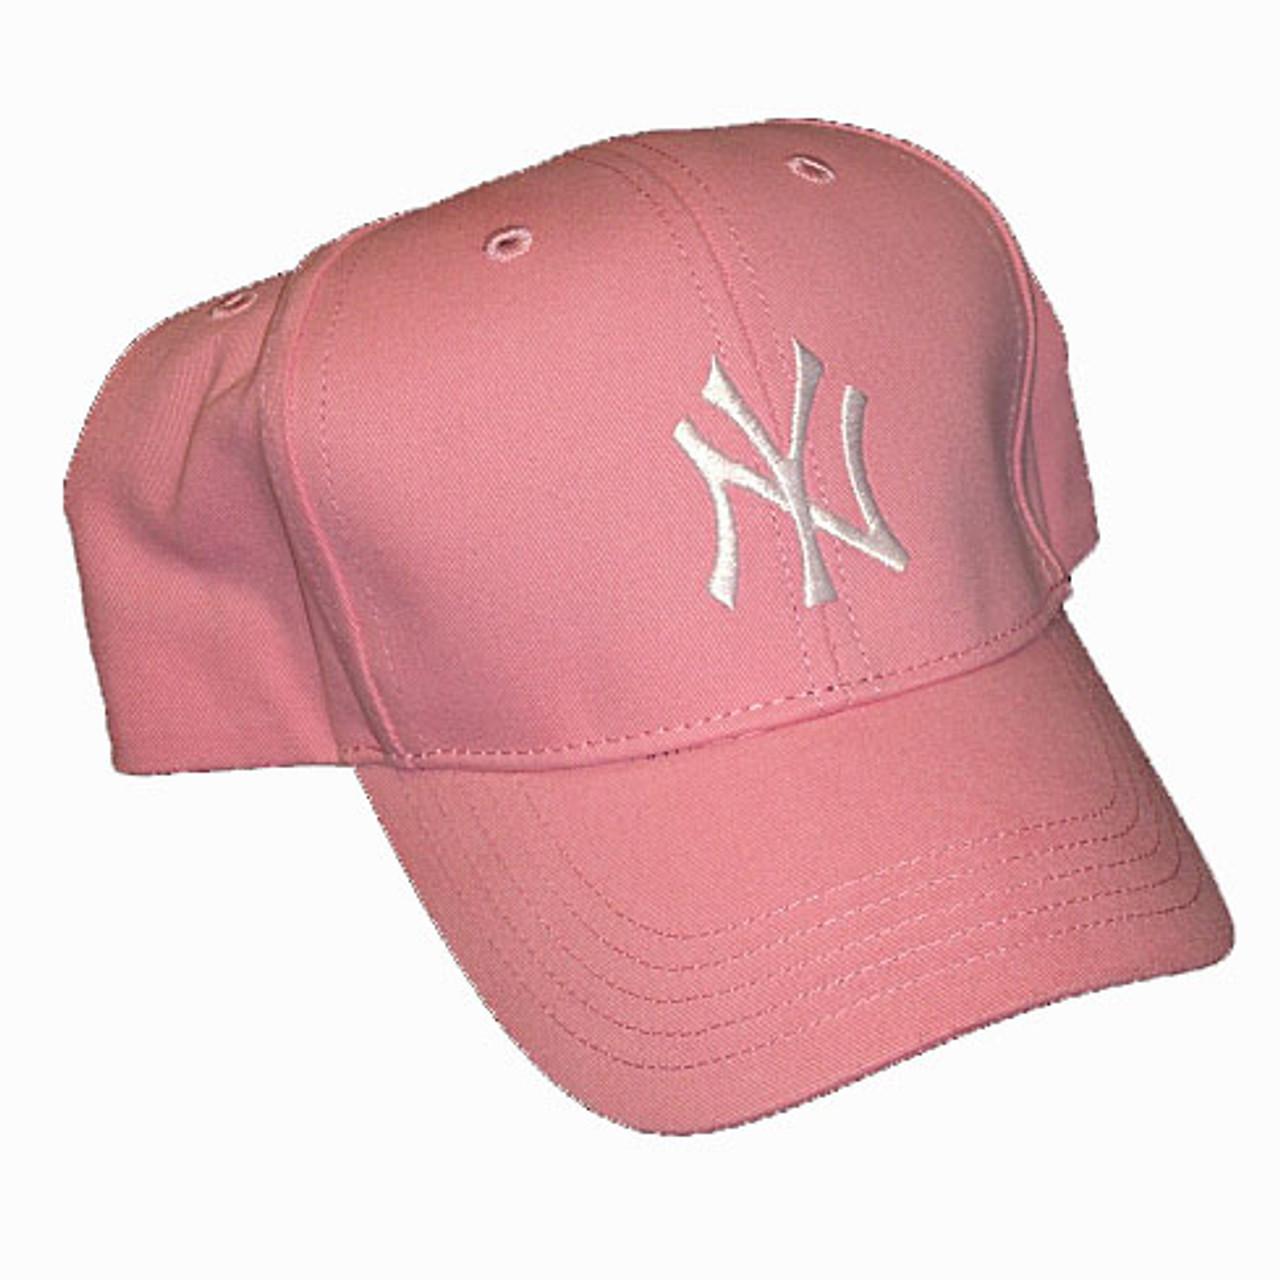 Toddler Pink New York Yankees Ball Girl T-Shirt